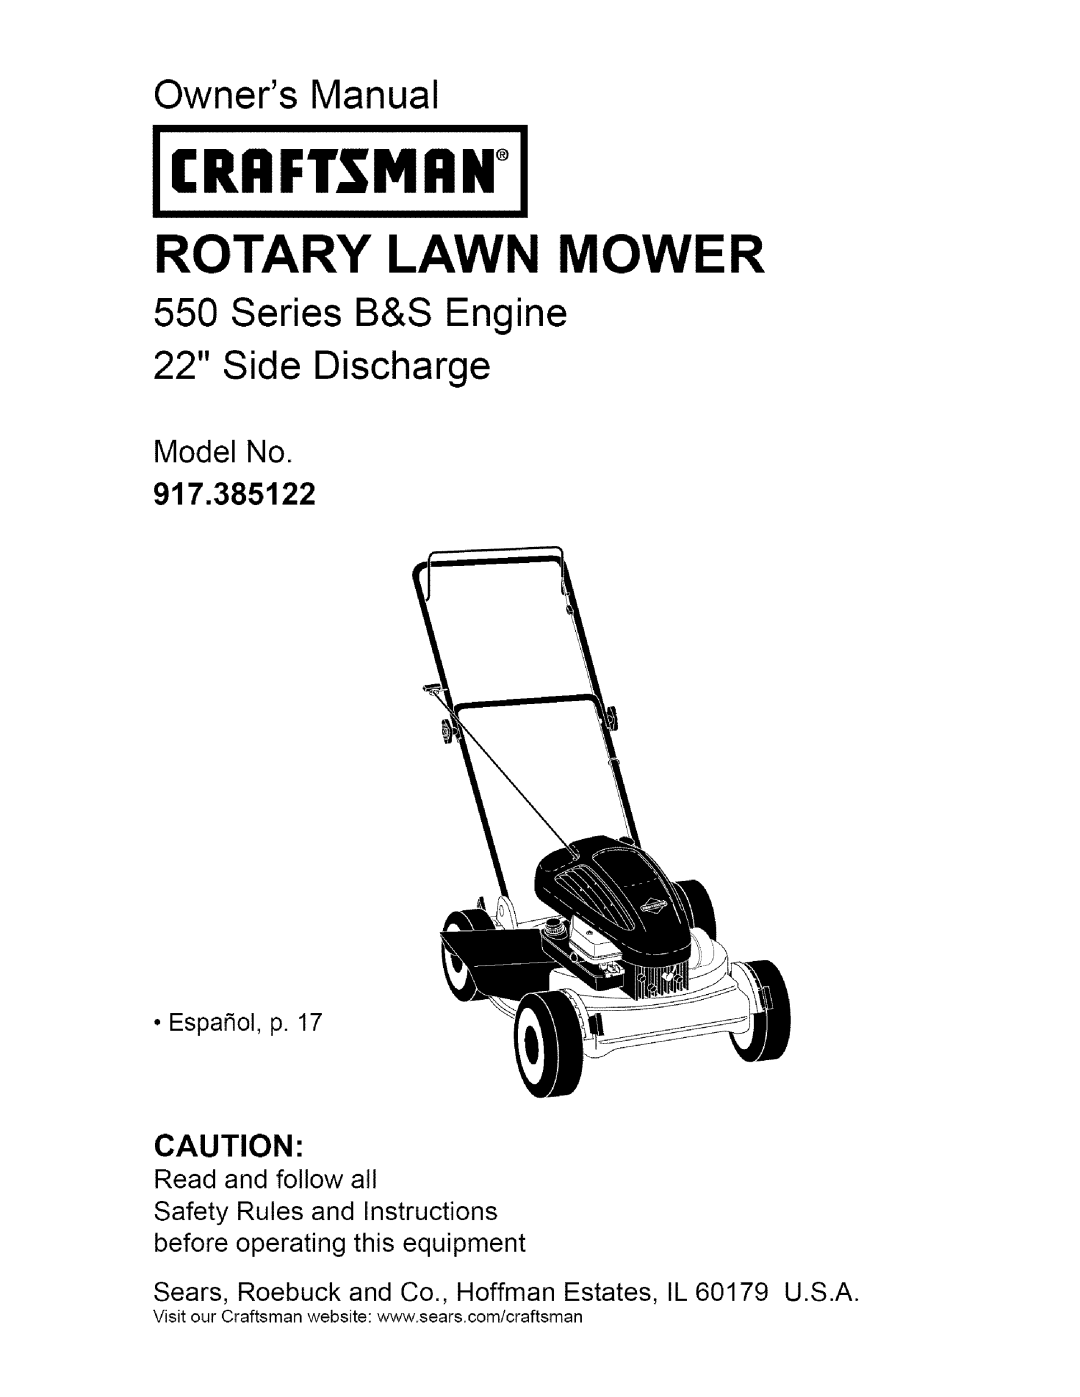 Craftsman 917.385122 manual Owners Manual, Series B&S Engine 22 Side Discharge, Rrftsmrn, Rotary Lawn Mower, Model No 